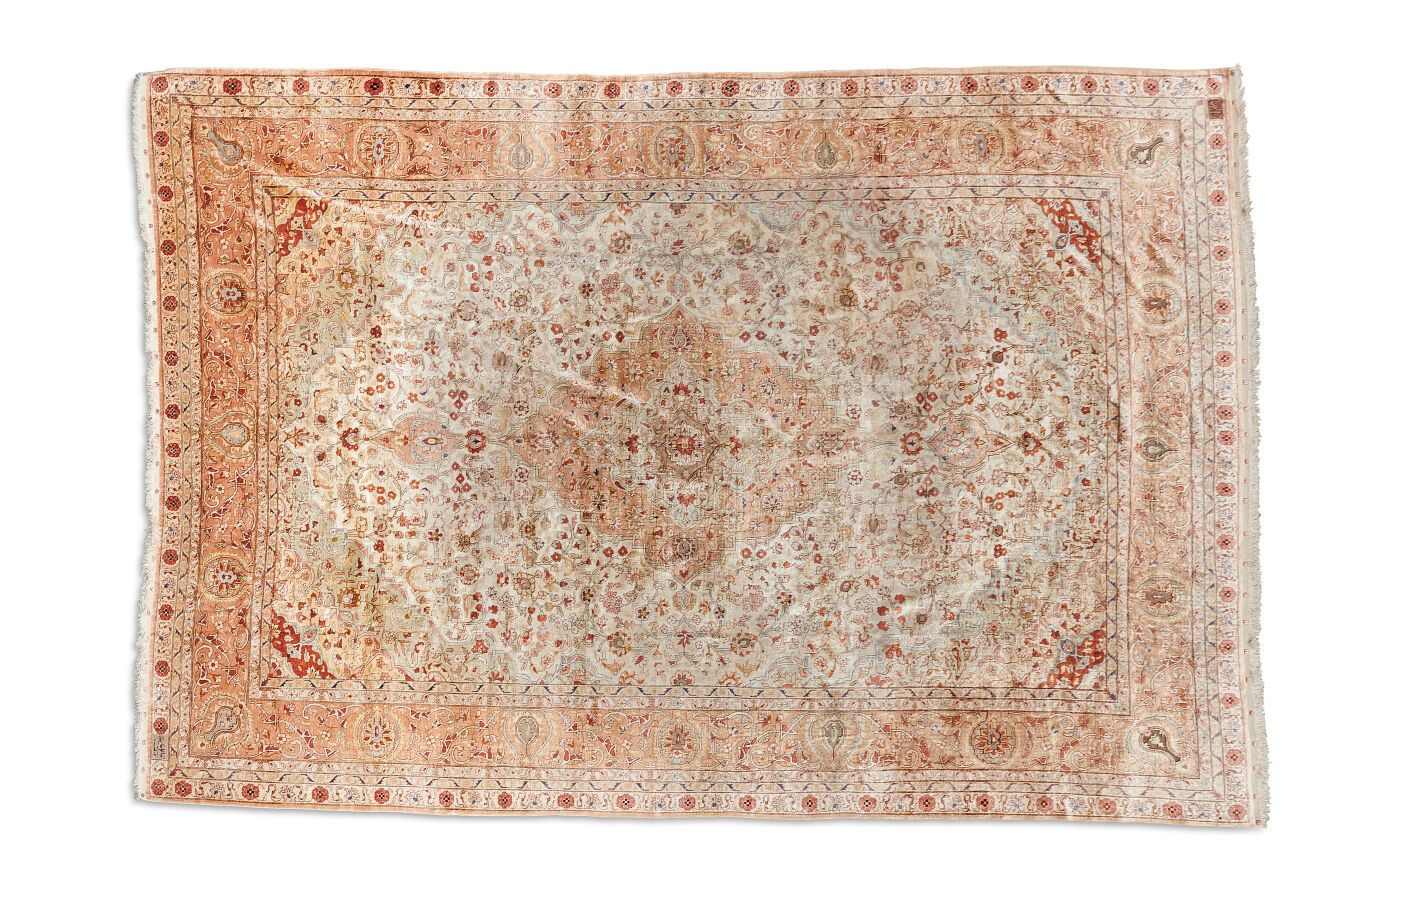 Null 带有金属线的Hereké丝毯
丝绸经线、纬线和绒线
土耳其西部，约1900年
380 x 260厘米
(轻微磨损)

这块特殊的地毯，打结精细，在象牙&hellip;